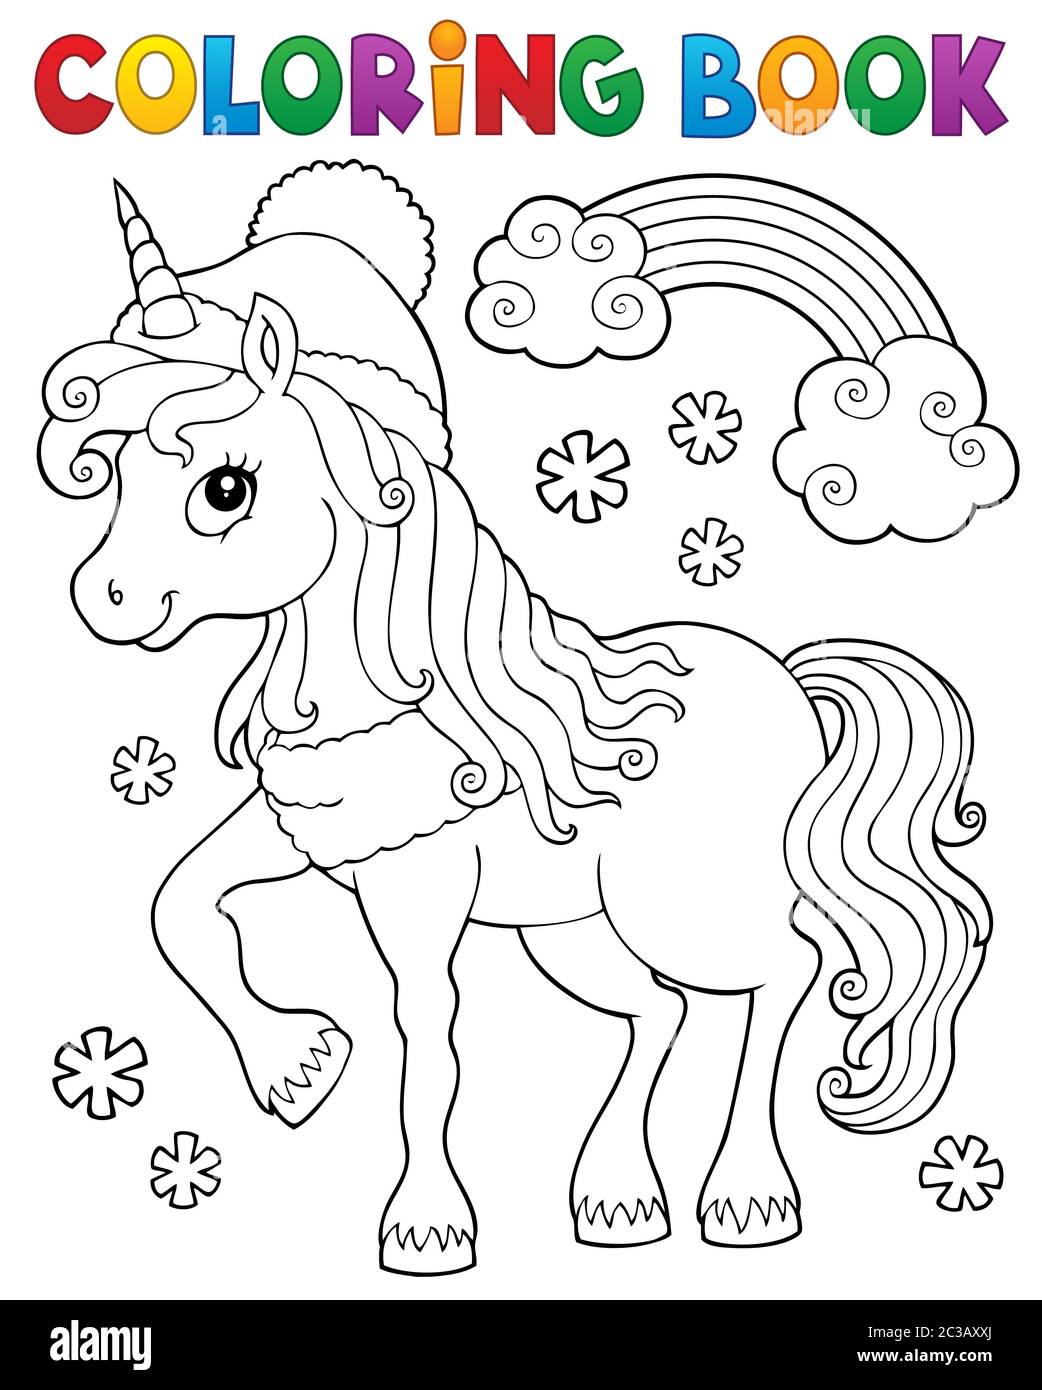 Coloring book winter unicorn theme 1 - picture illustration Stock Photo ...